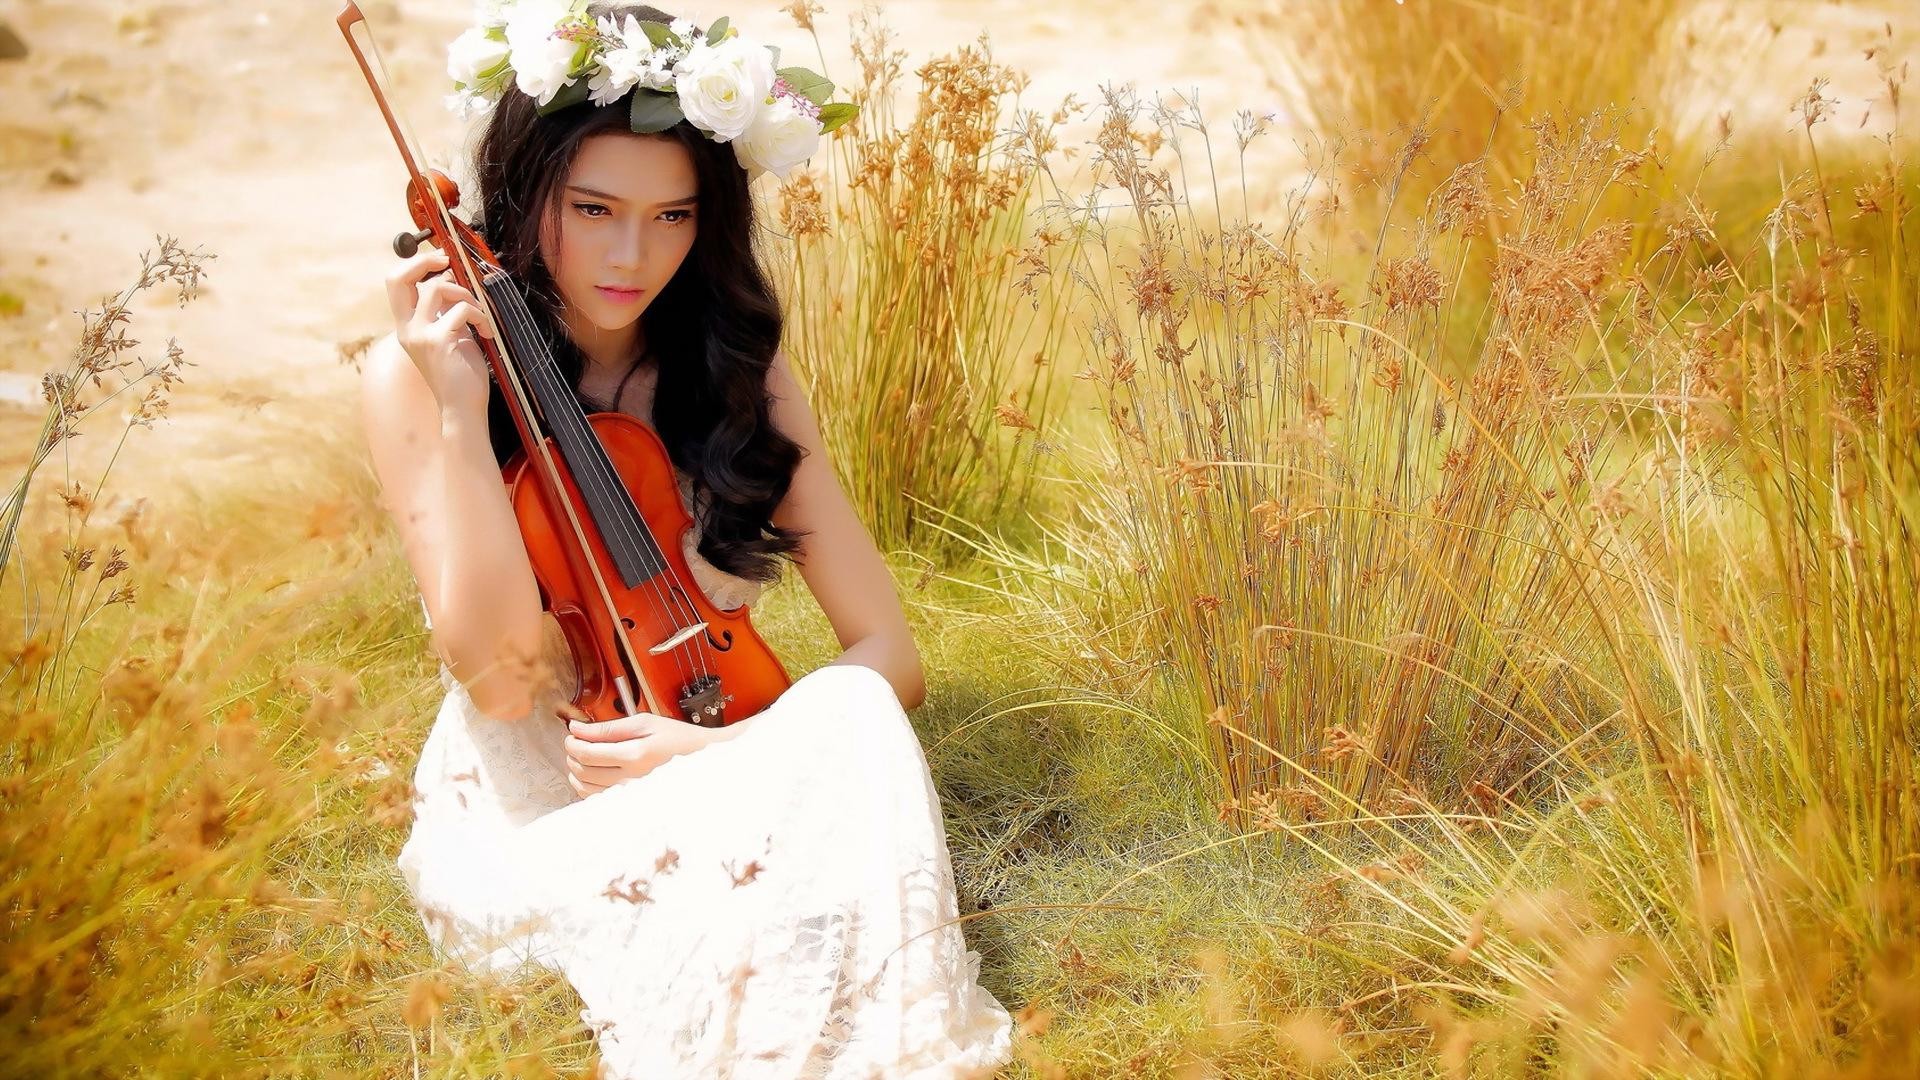 Bride Violin Music Girl In Field HD Wallpaper New